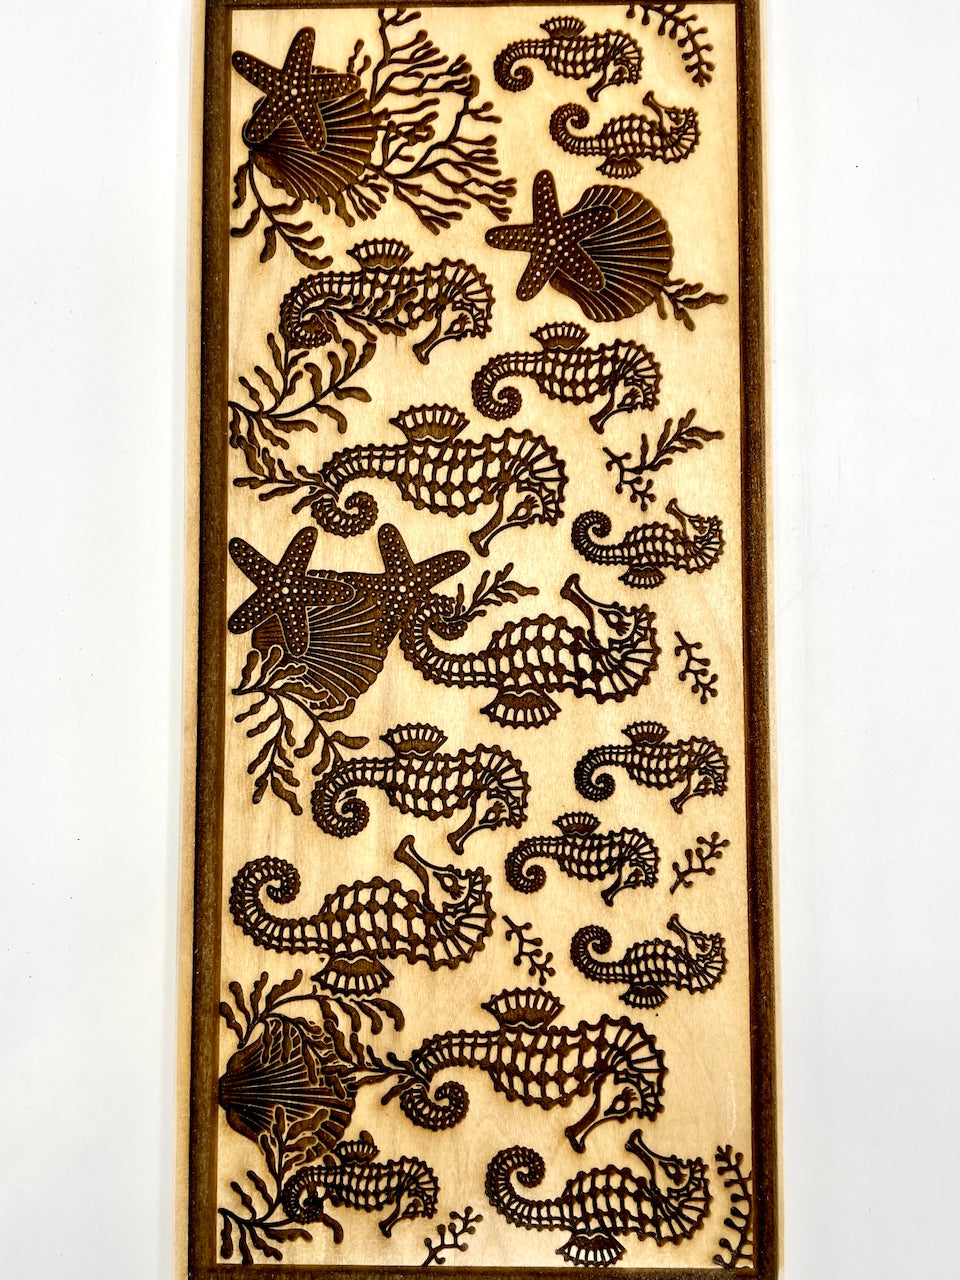 Seahorse Textured Plank